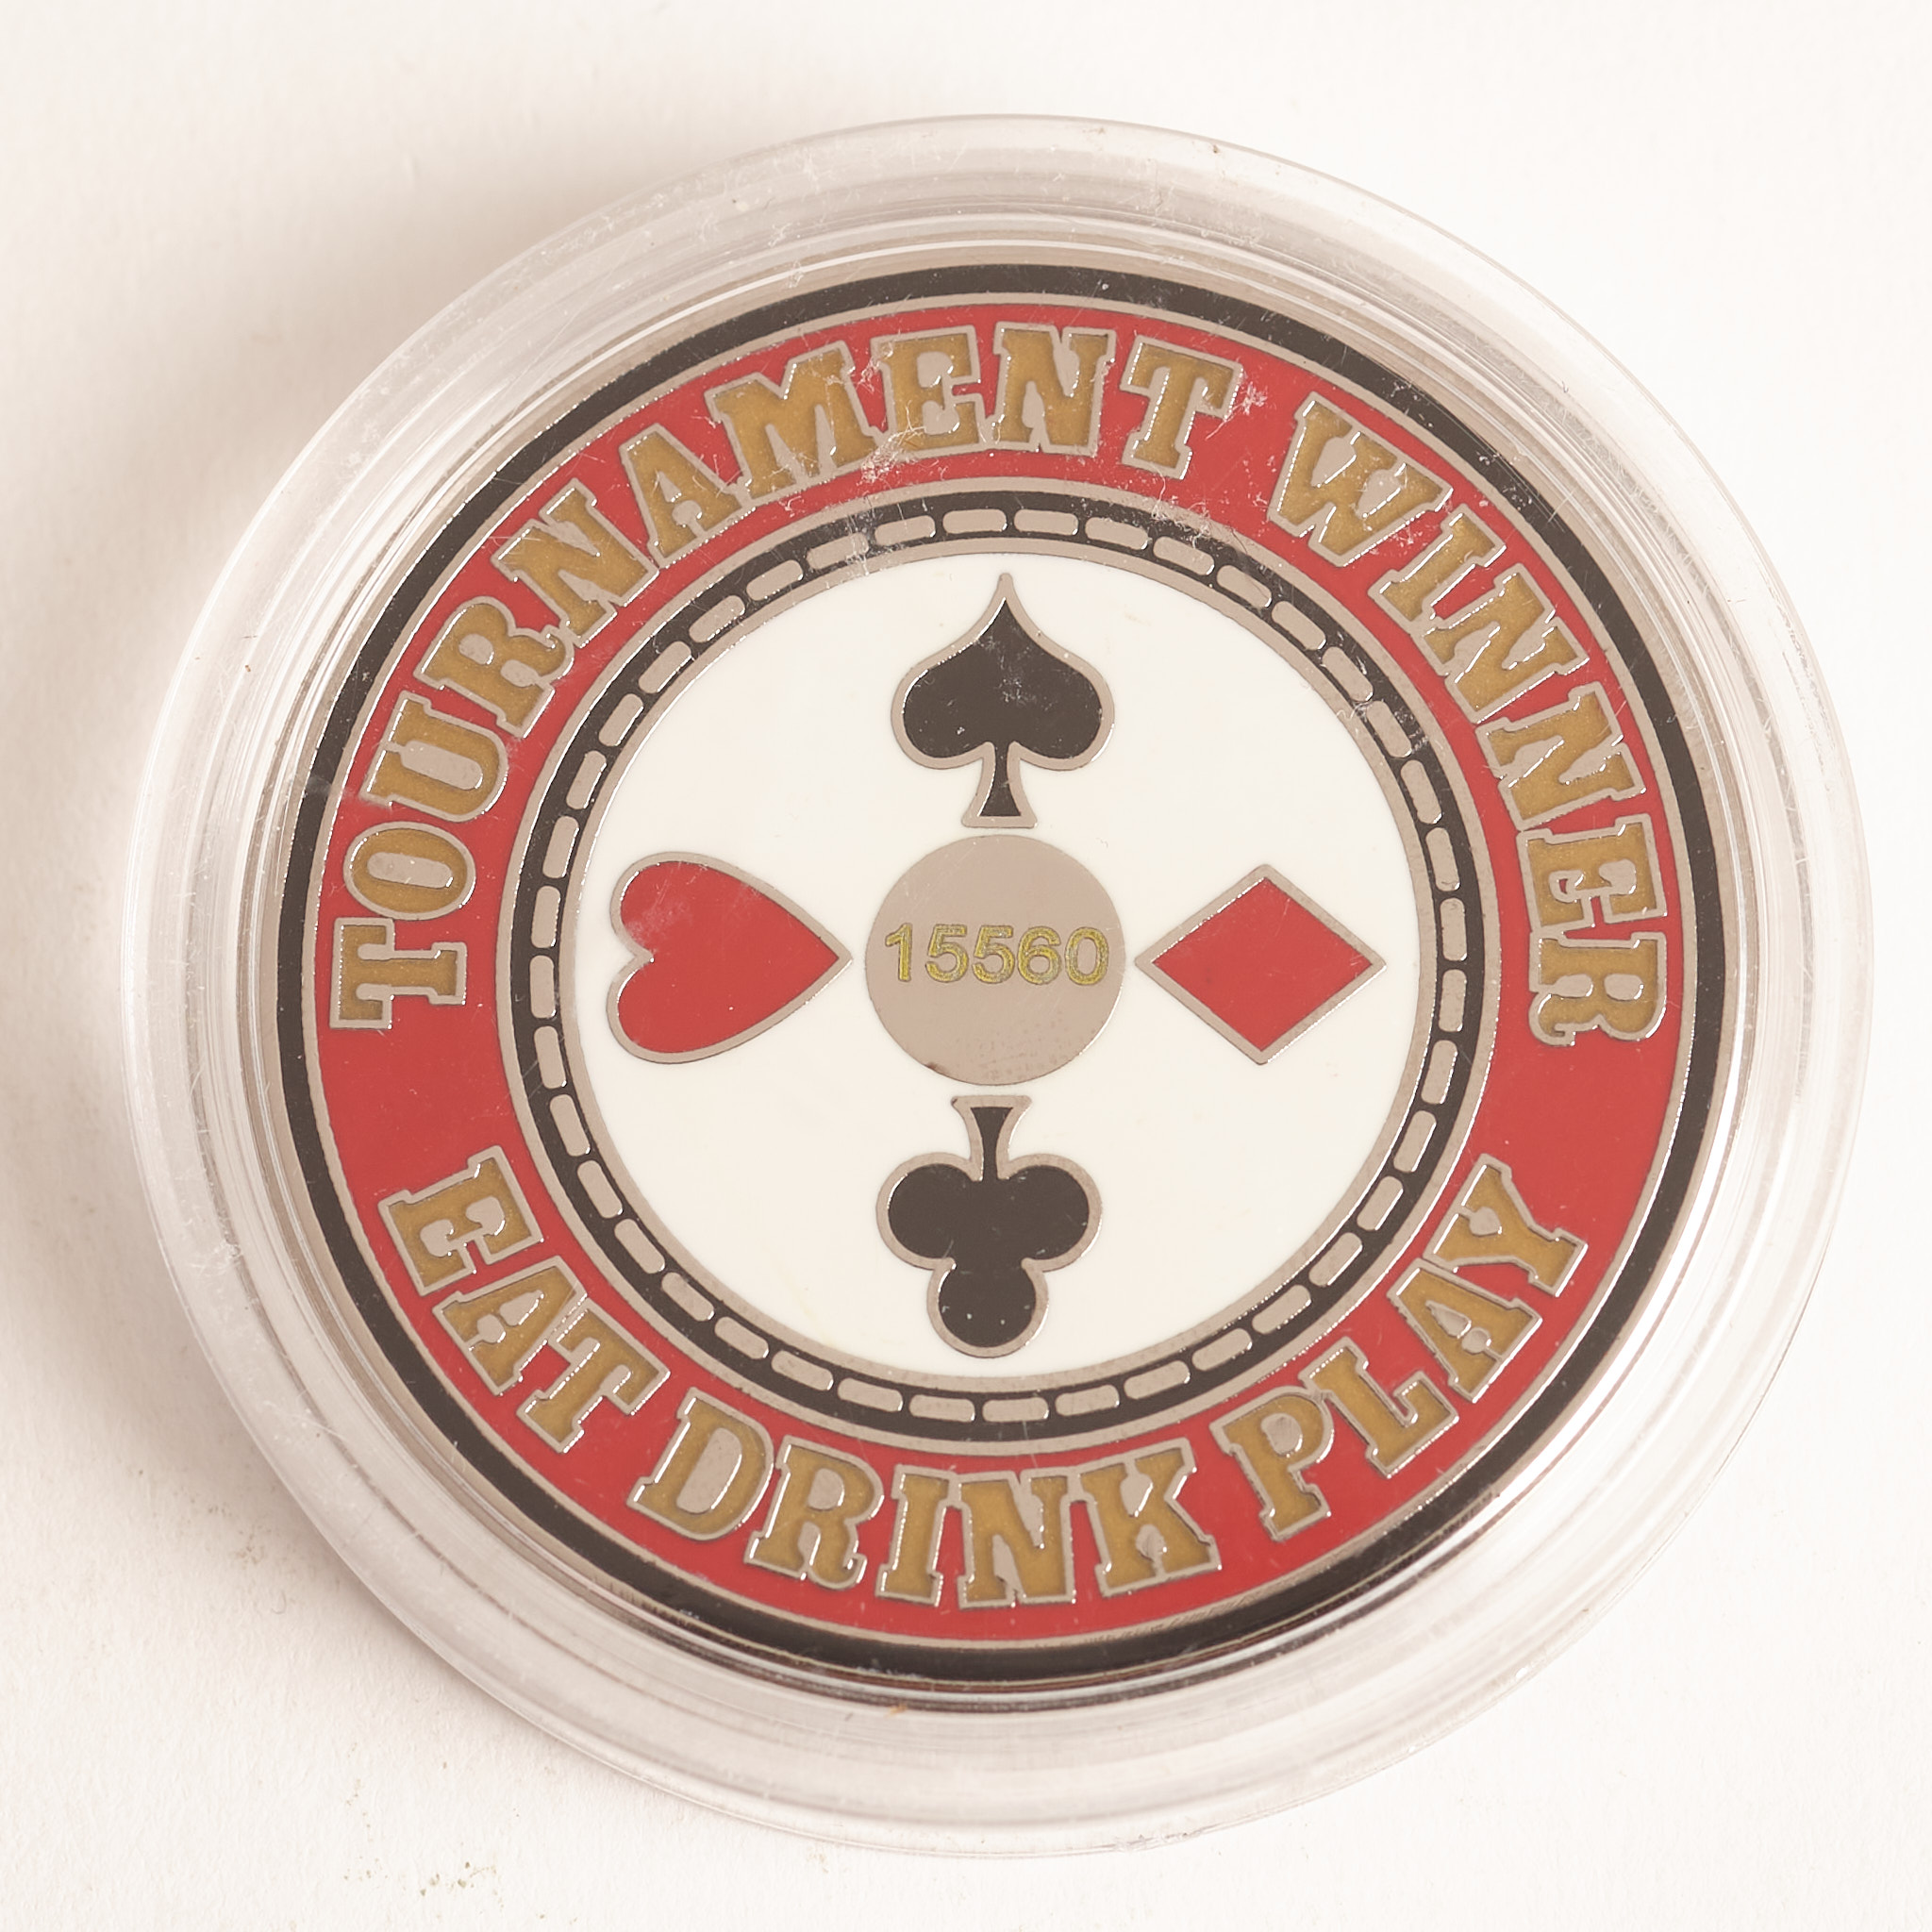 NPPL NATIONAL PUB POKER LEAGUE, (No. 15560) TOURNAMENT WINNER, EAT DRINK PLAY, Poker Card Guard